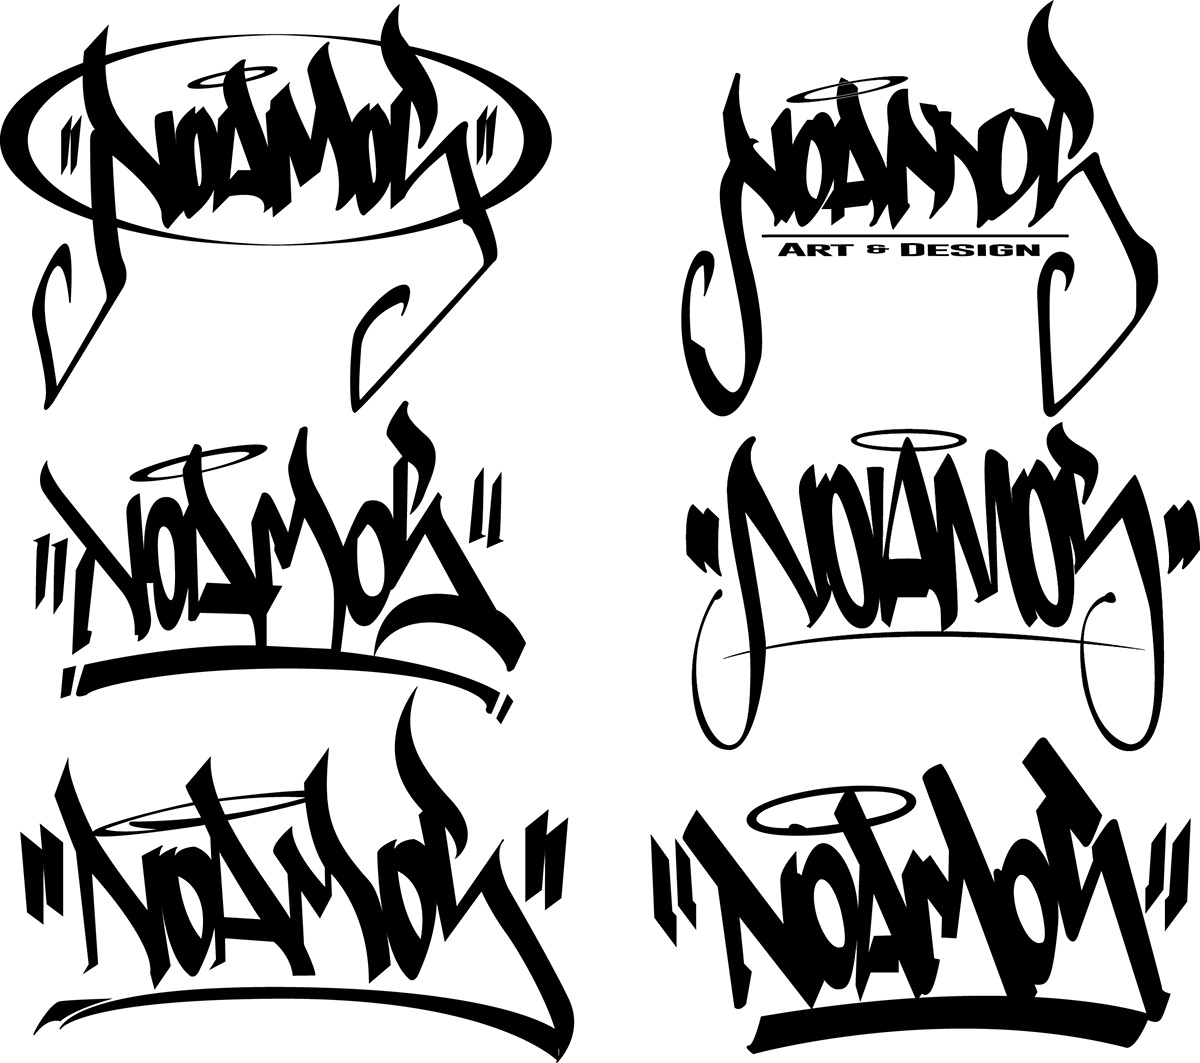 handstyles calligraffiti